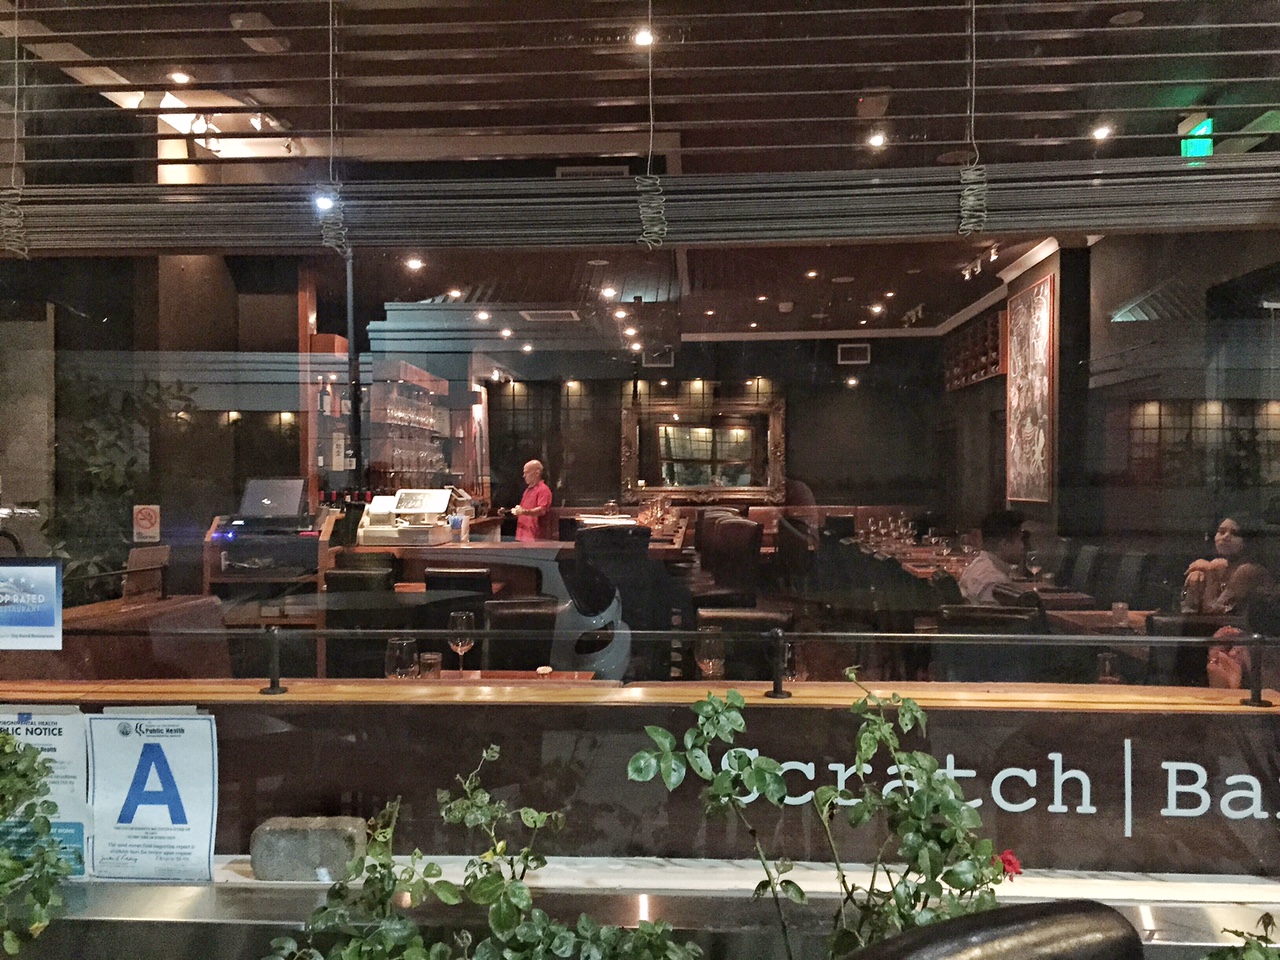 Inside the still-going Scratch Bar in Beverly Hills